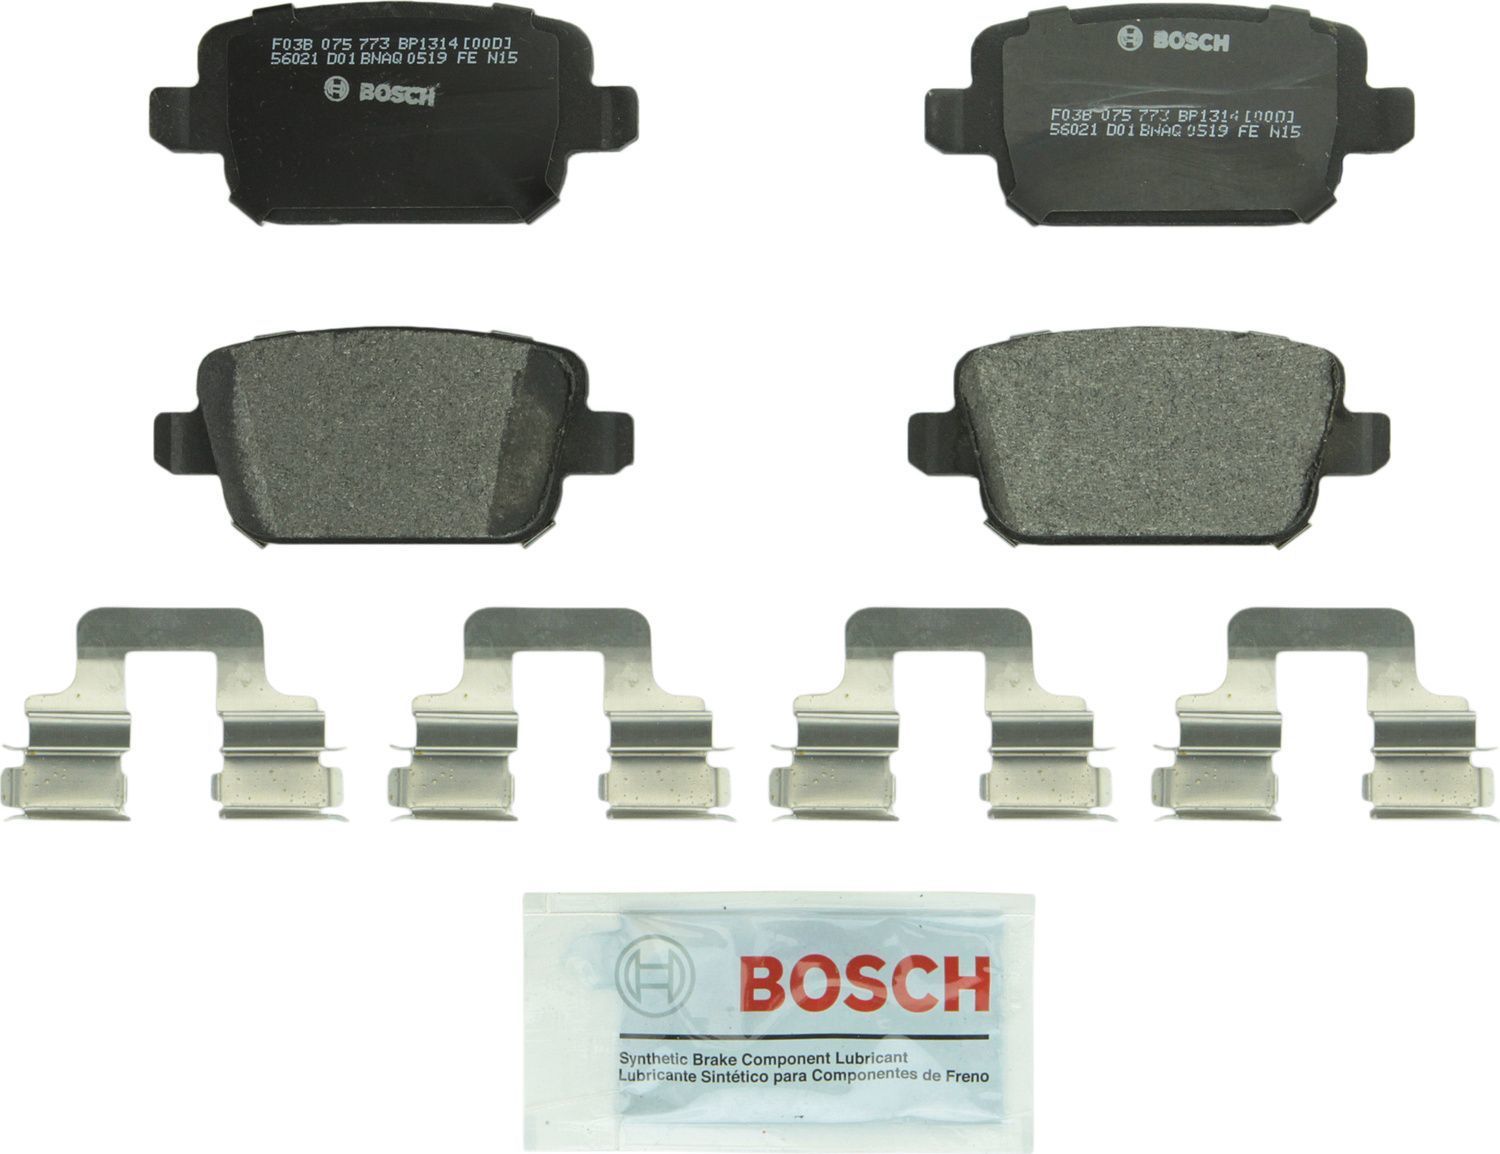 BOSCH BRAKE - Bosch QuietCast Semi-Metallic Brake Pads (Rear) - BQC BP1314